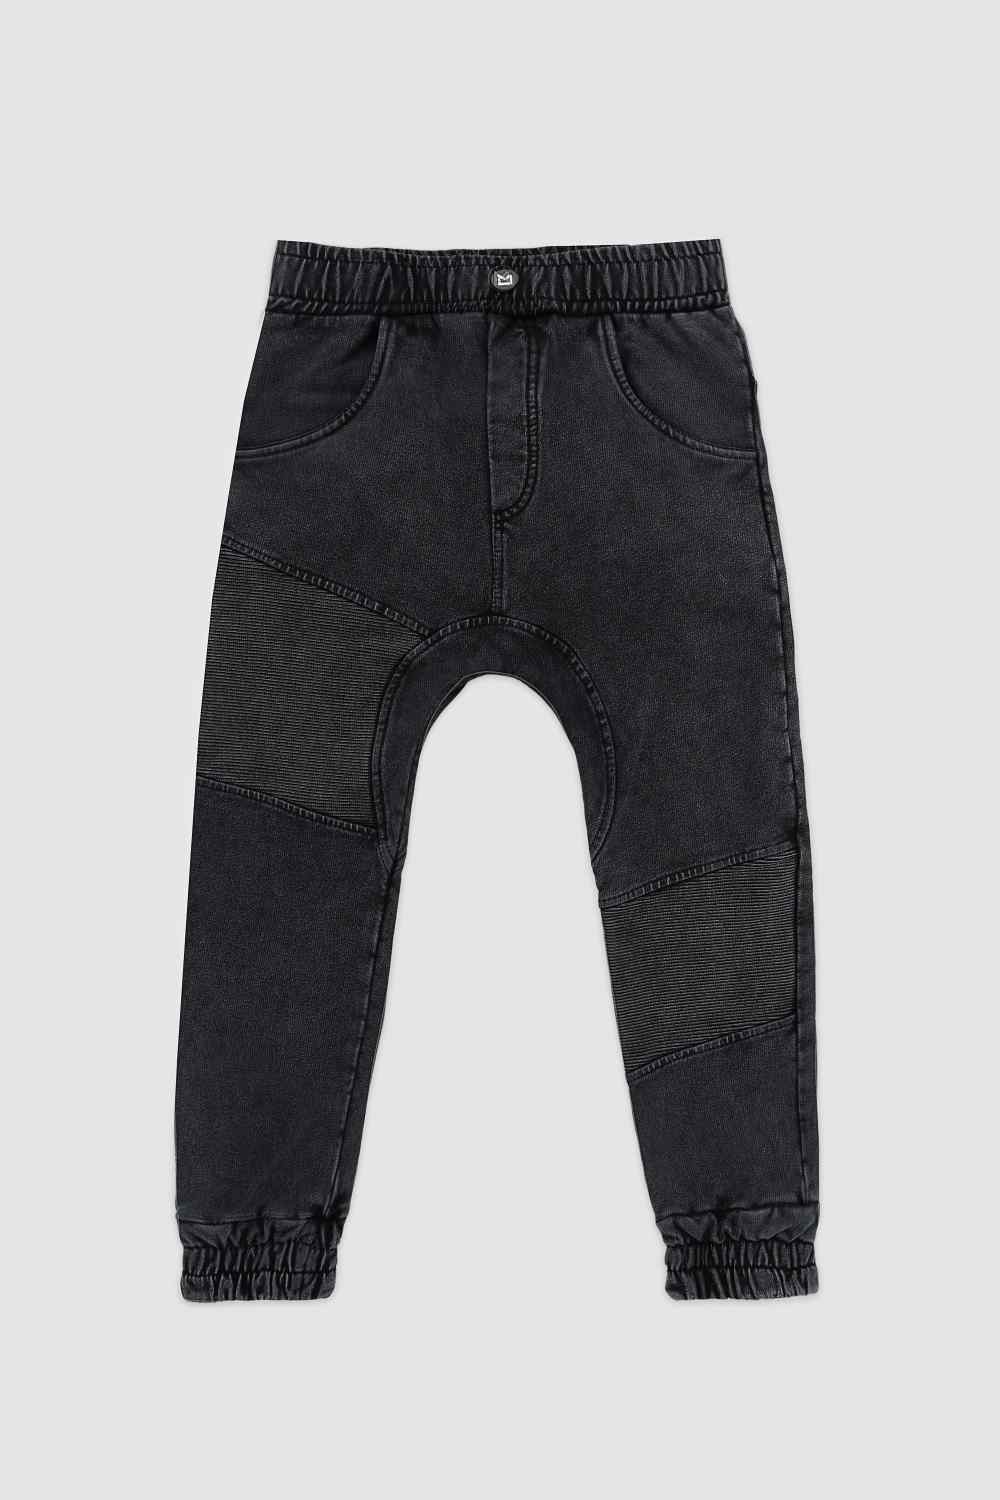 Vintage Black Panel Pants